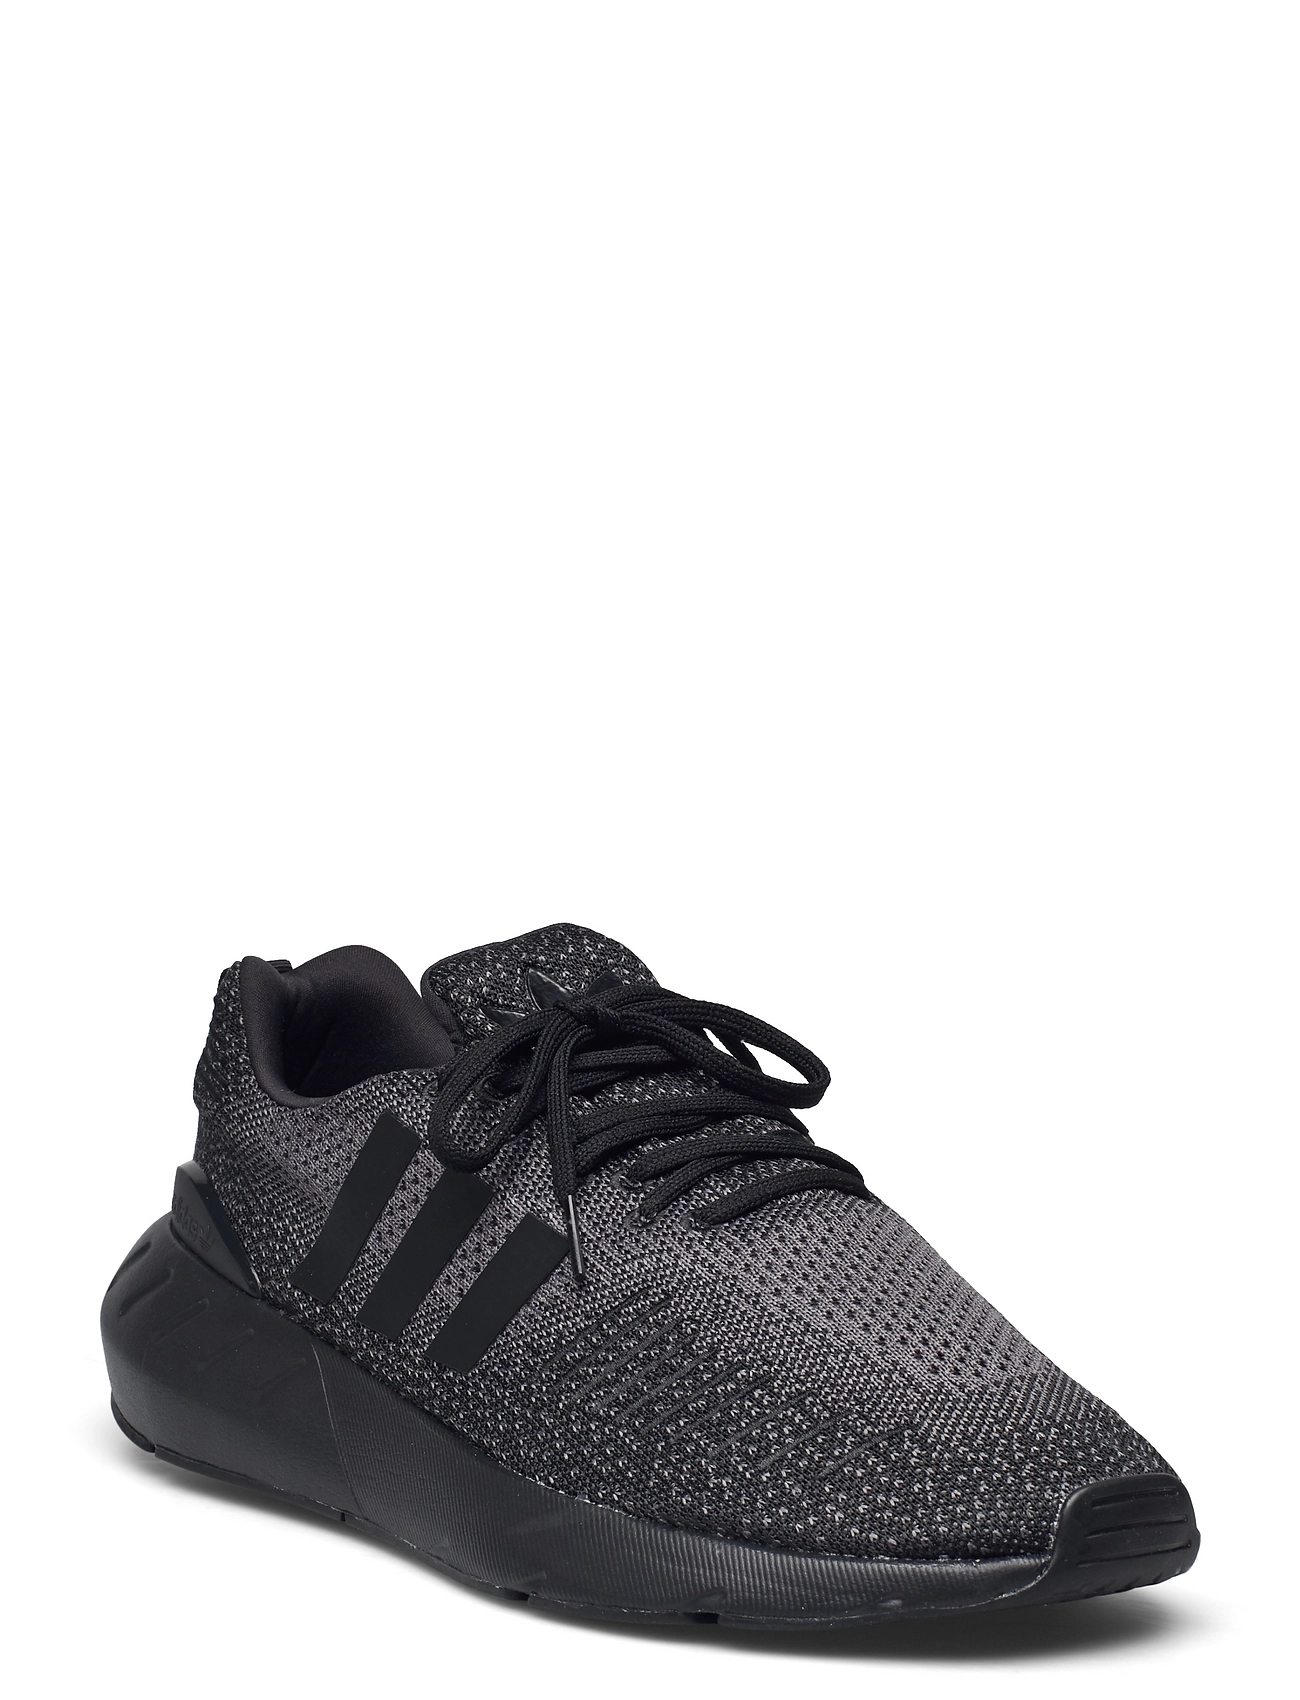 Swift Run 22 Shoes Low-top Sneakers Black Adidas Originals